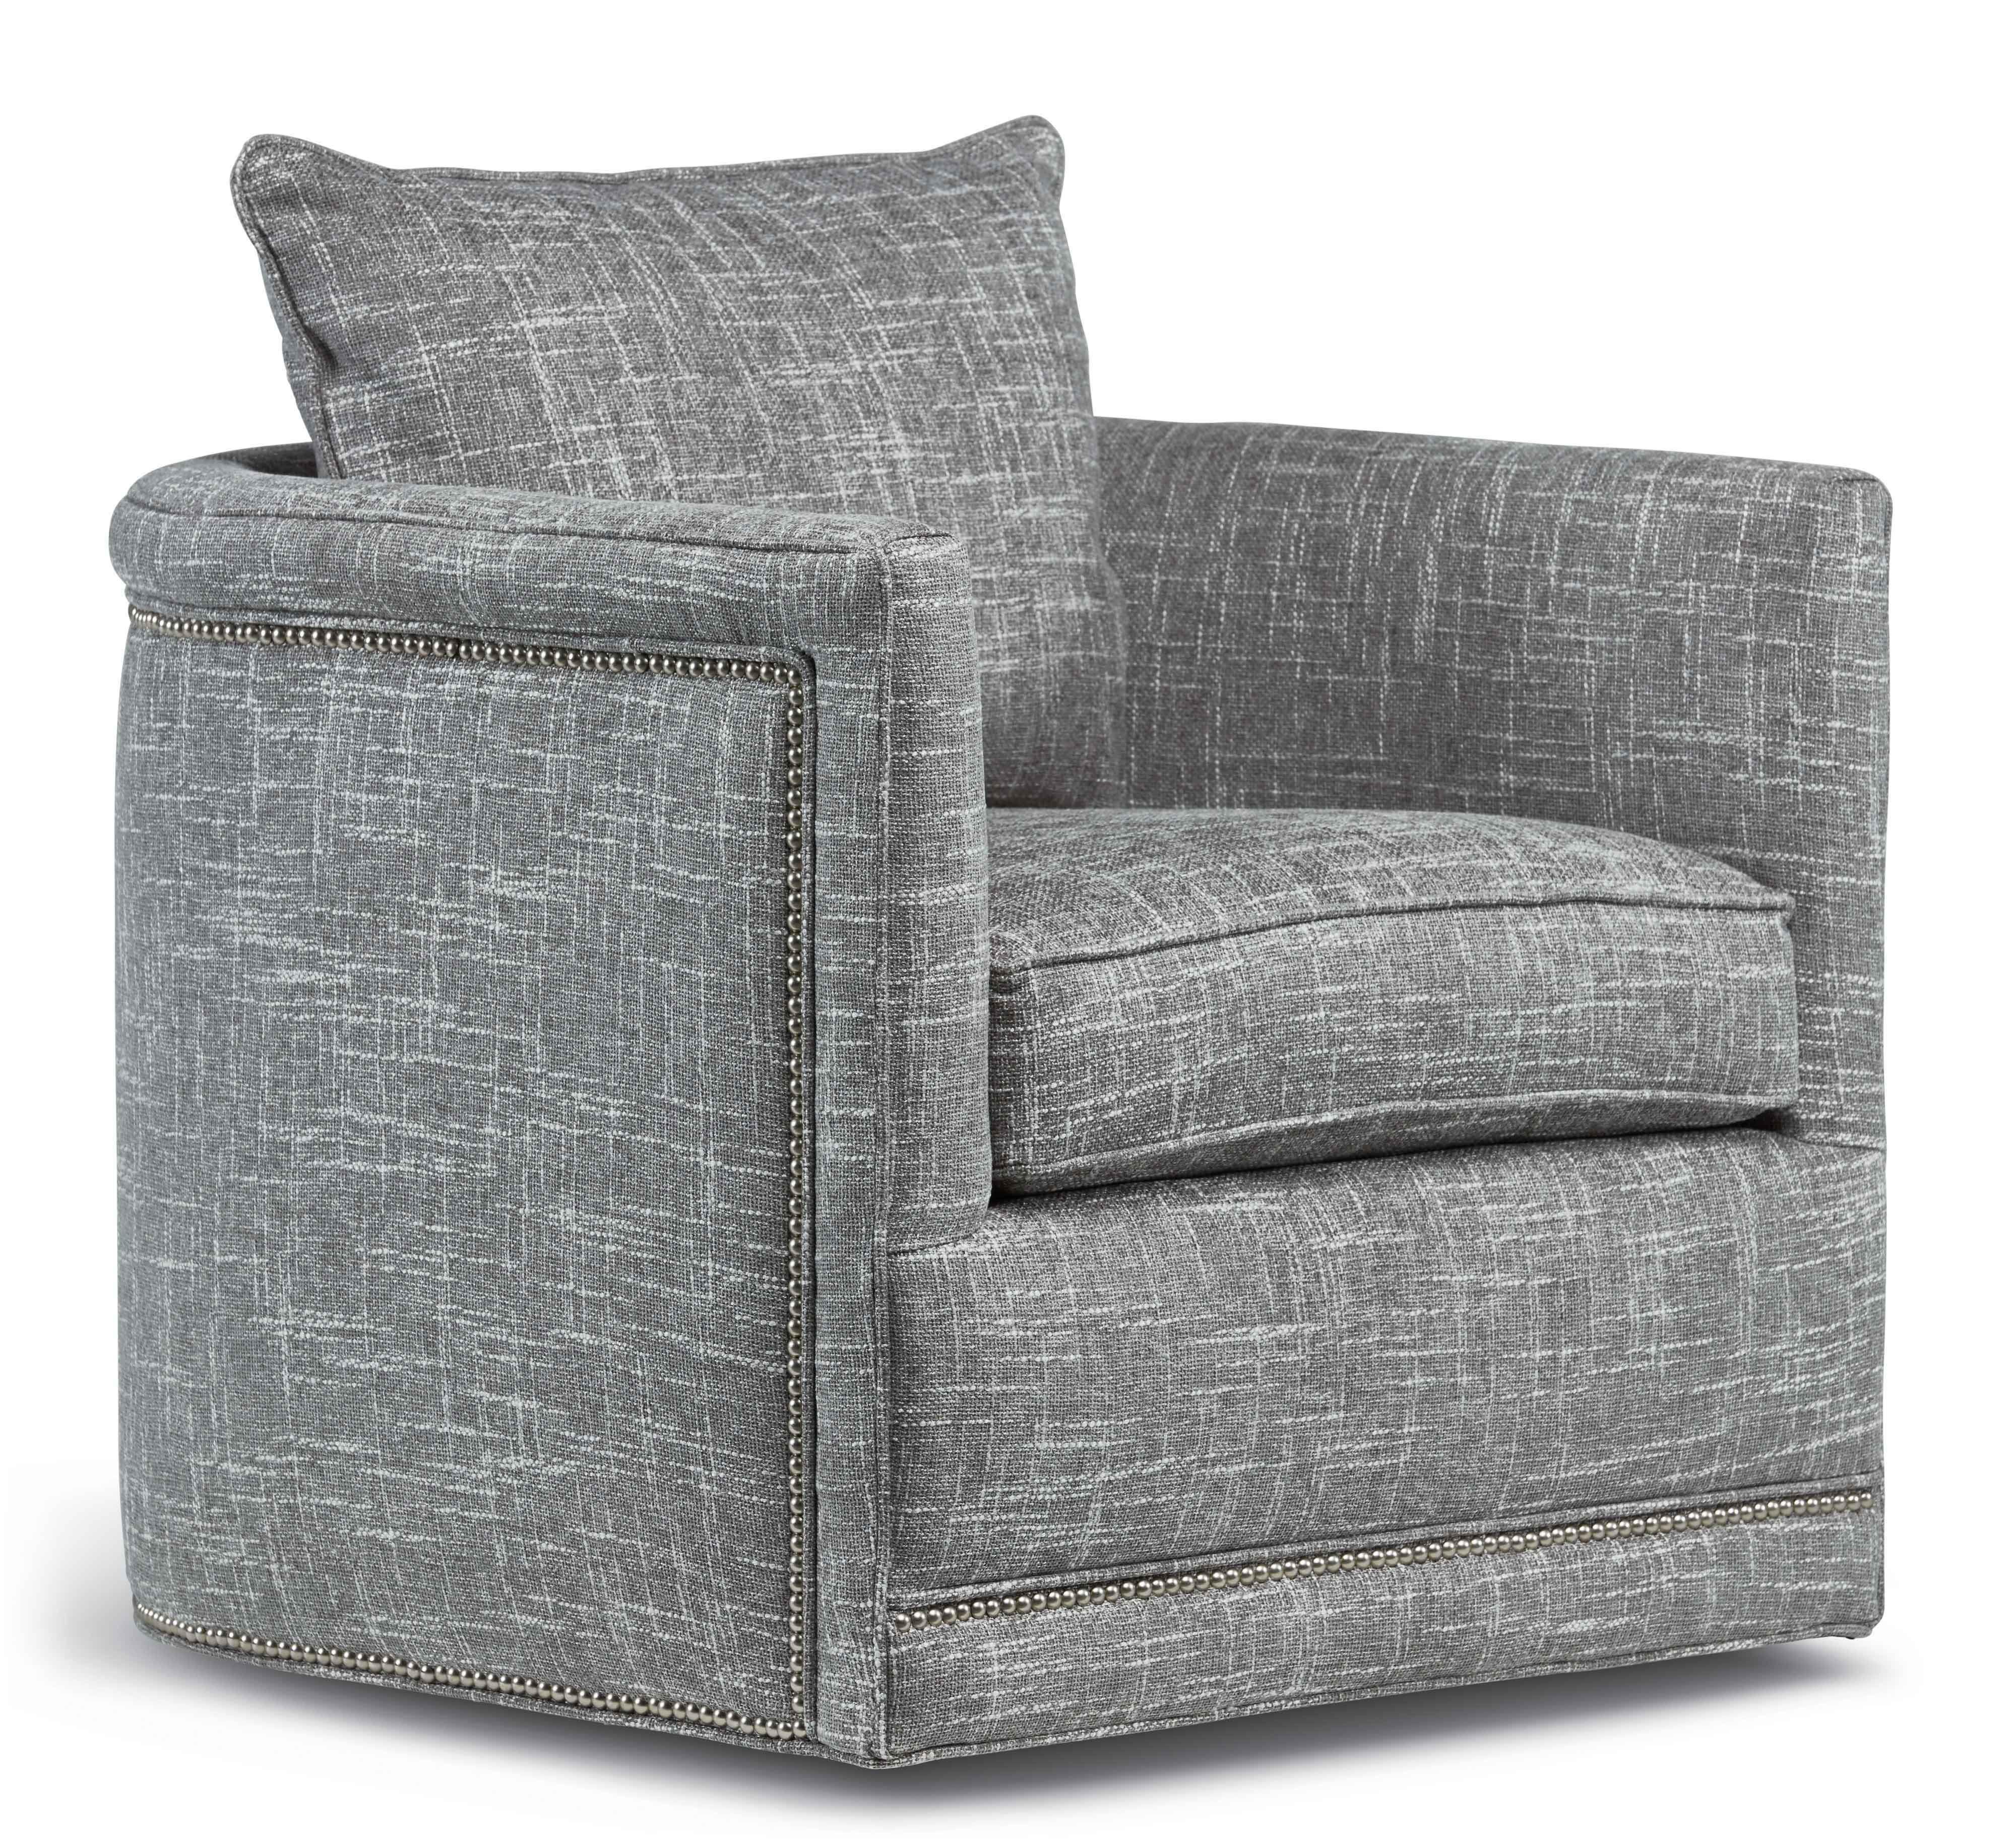 Swivel chairs Stucky : : room & hf Chair | & living hooker : chaises Robb furnishings Aura